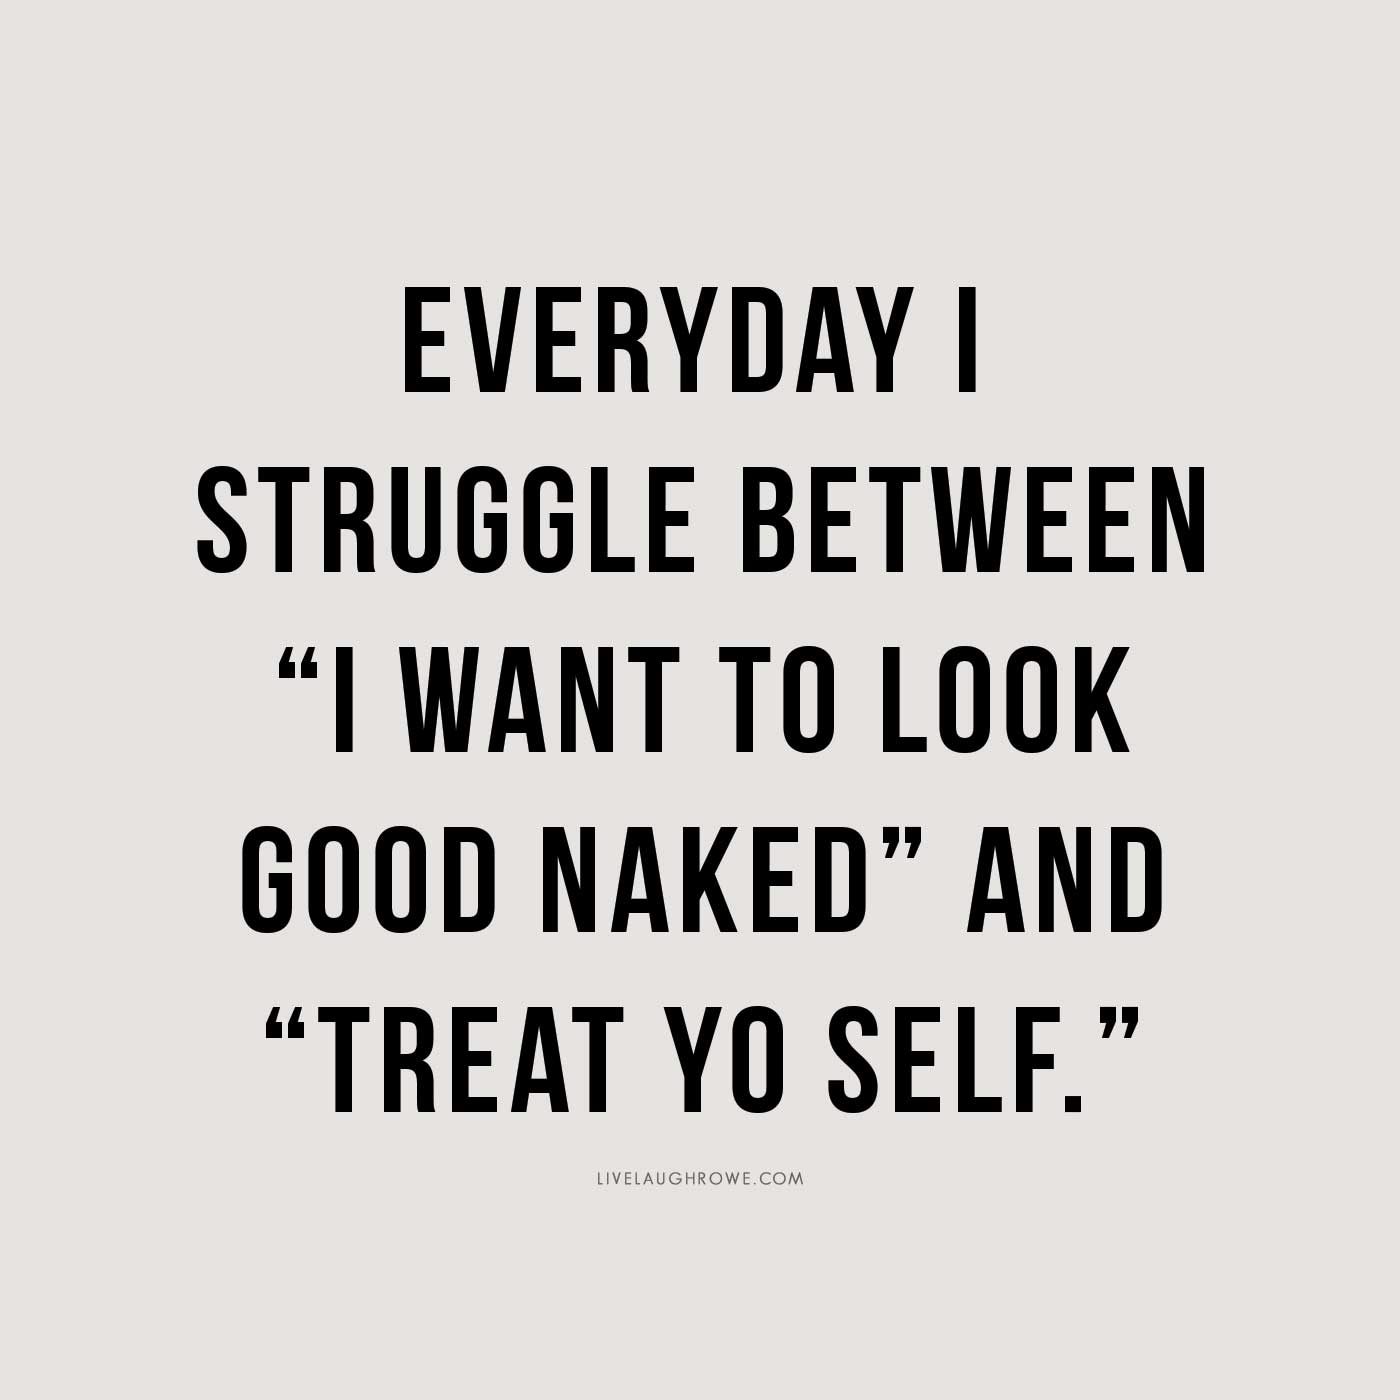 Everyday I struggle between "I want to look good naked" and "Treat Yo Self."